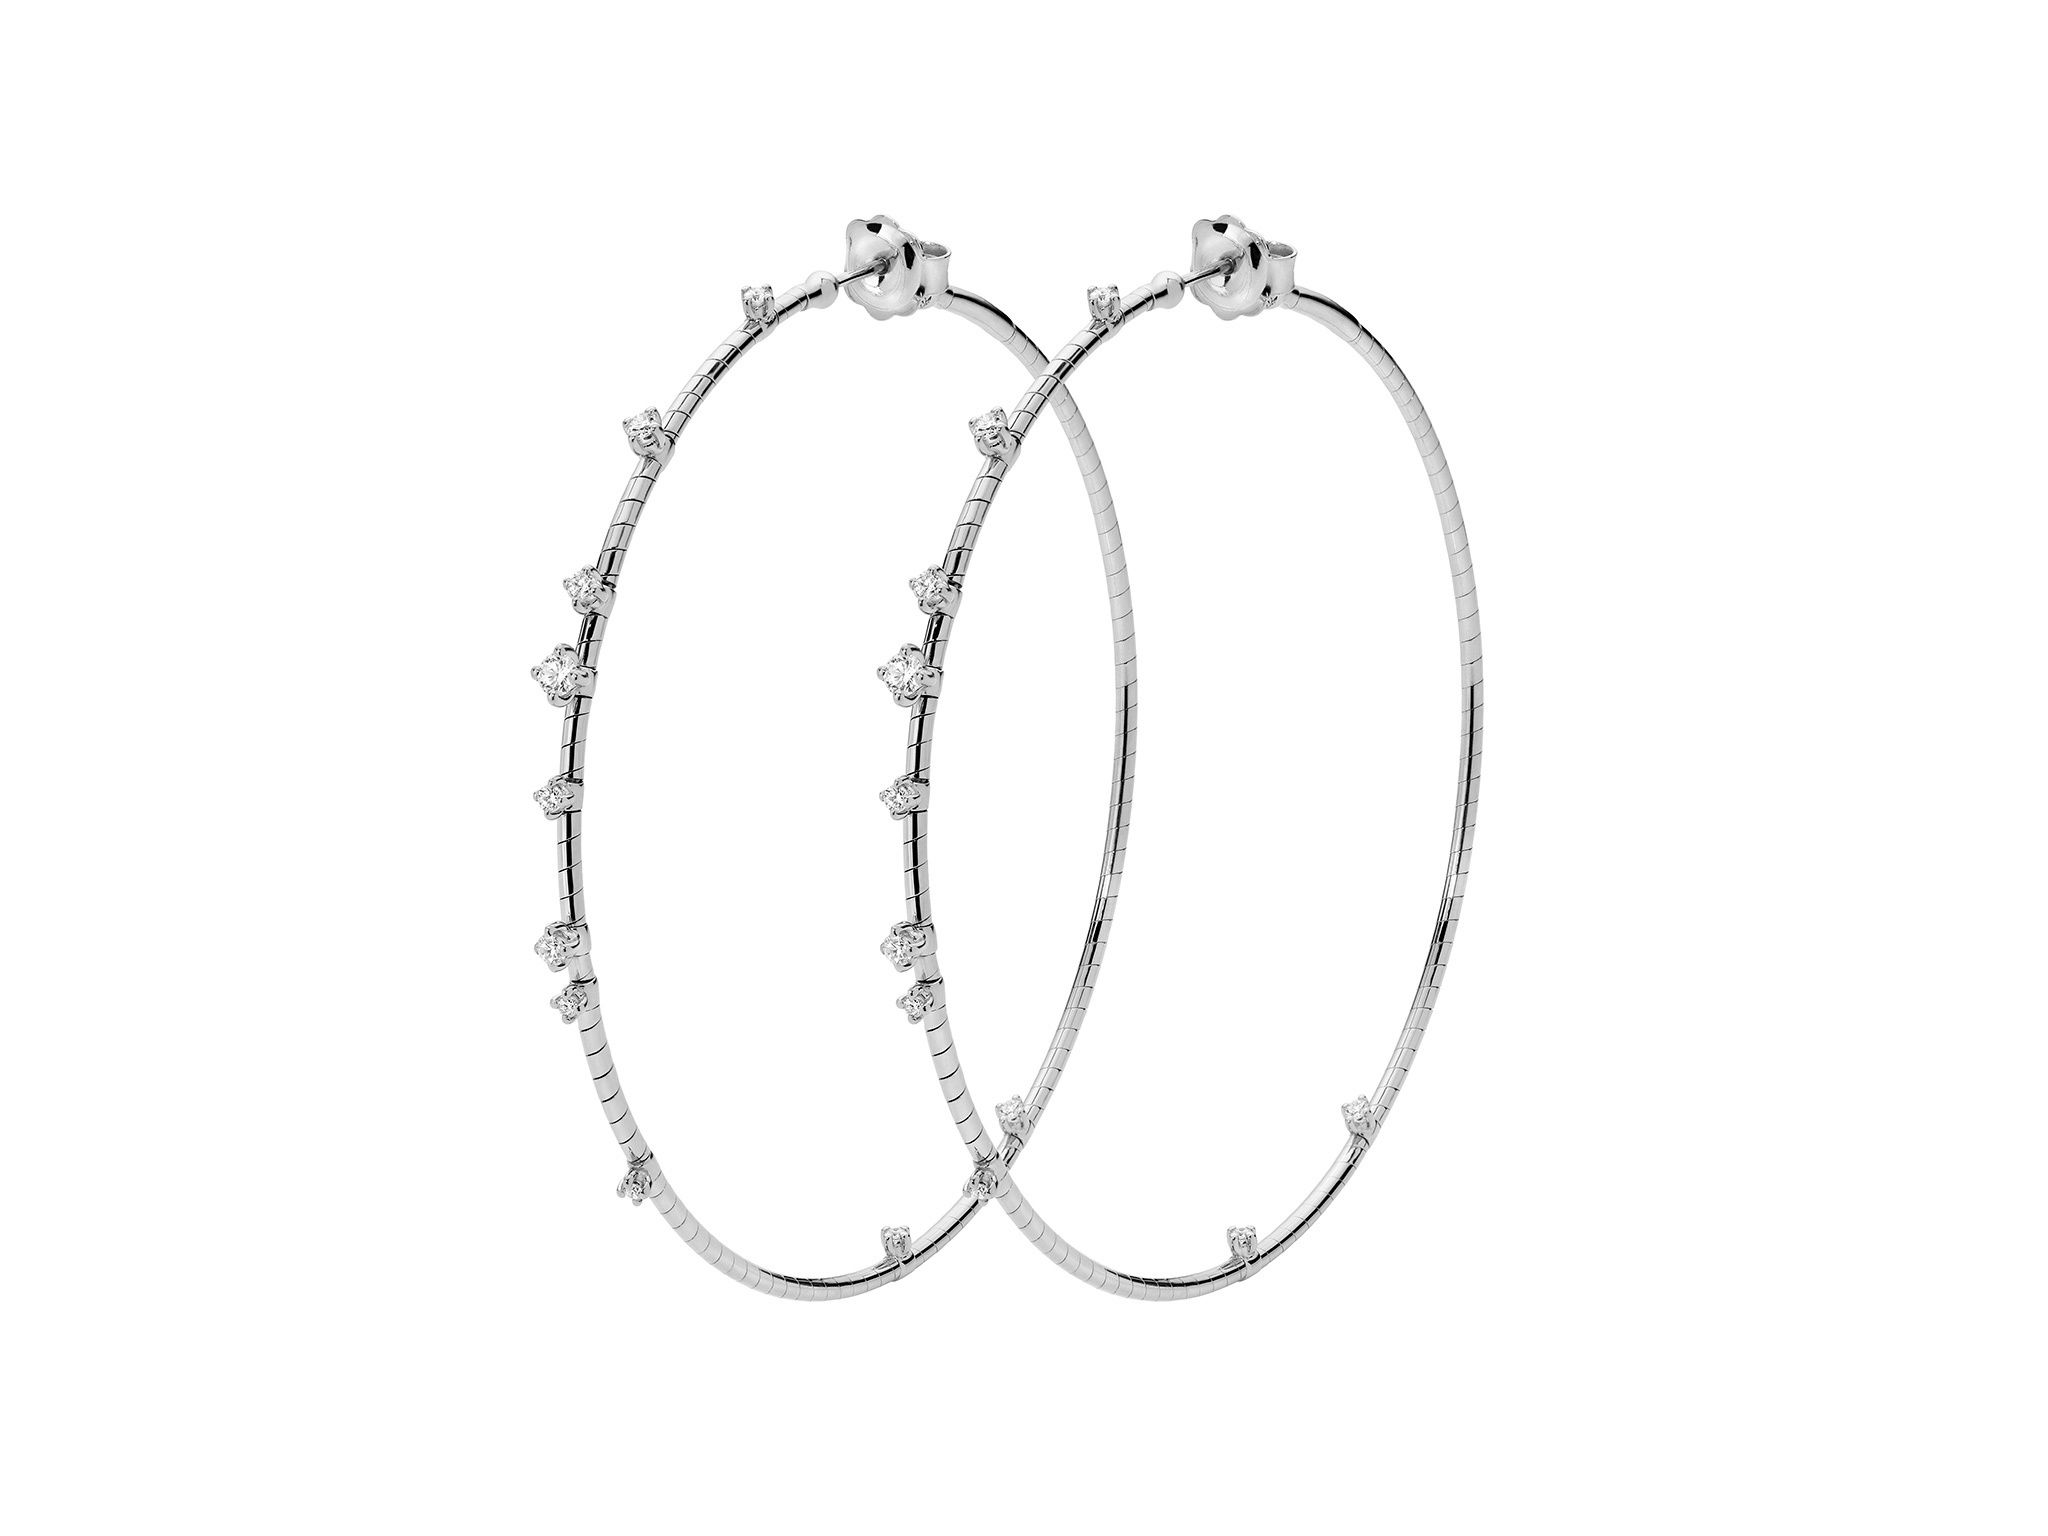 Rugiada Diamanti 6cm Hoop Earrings with White Diamonds in 18kt White Gold